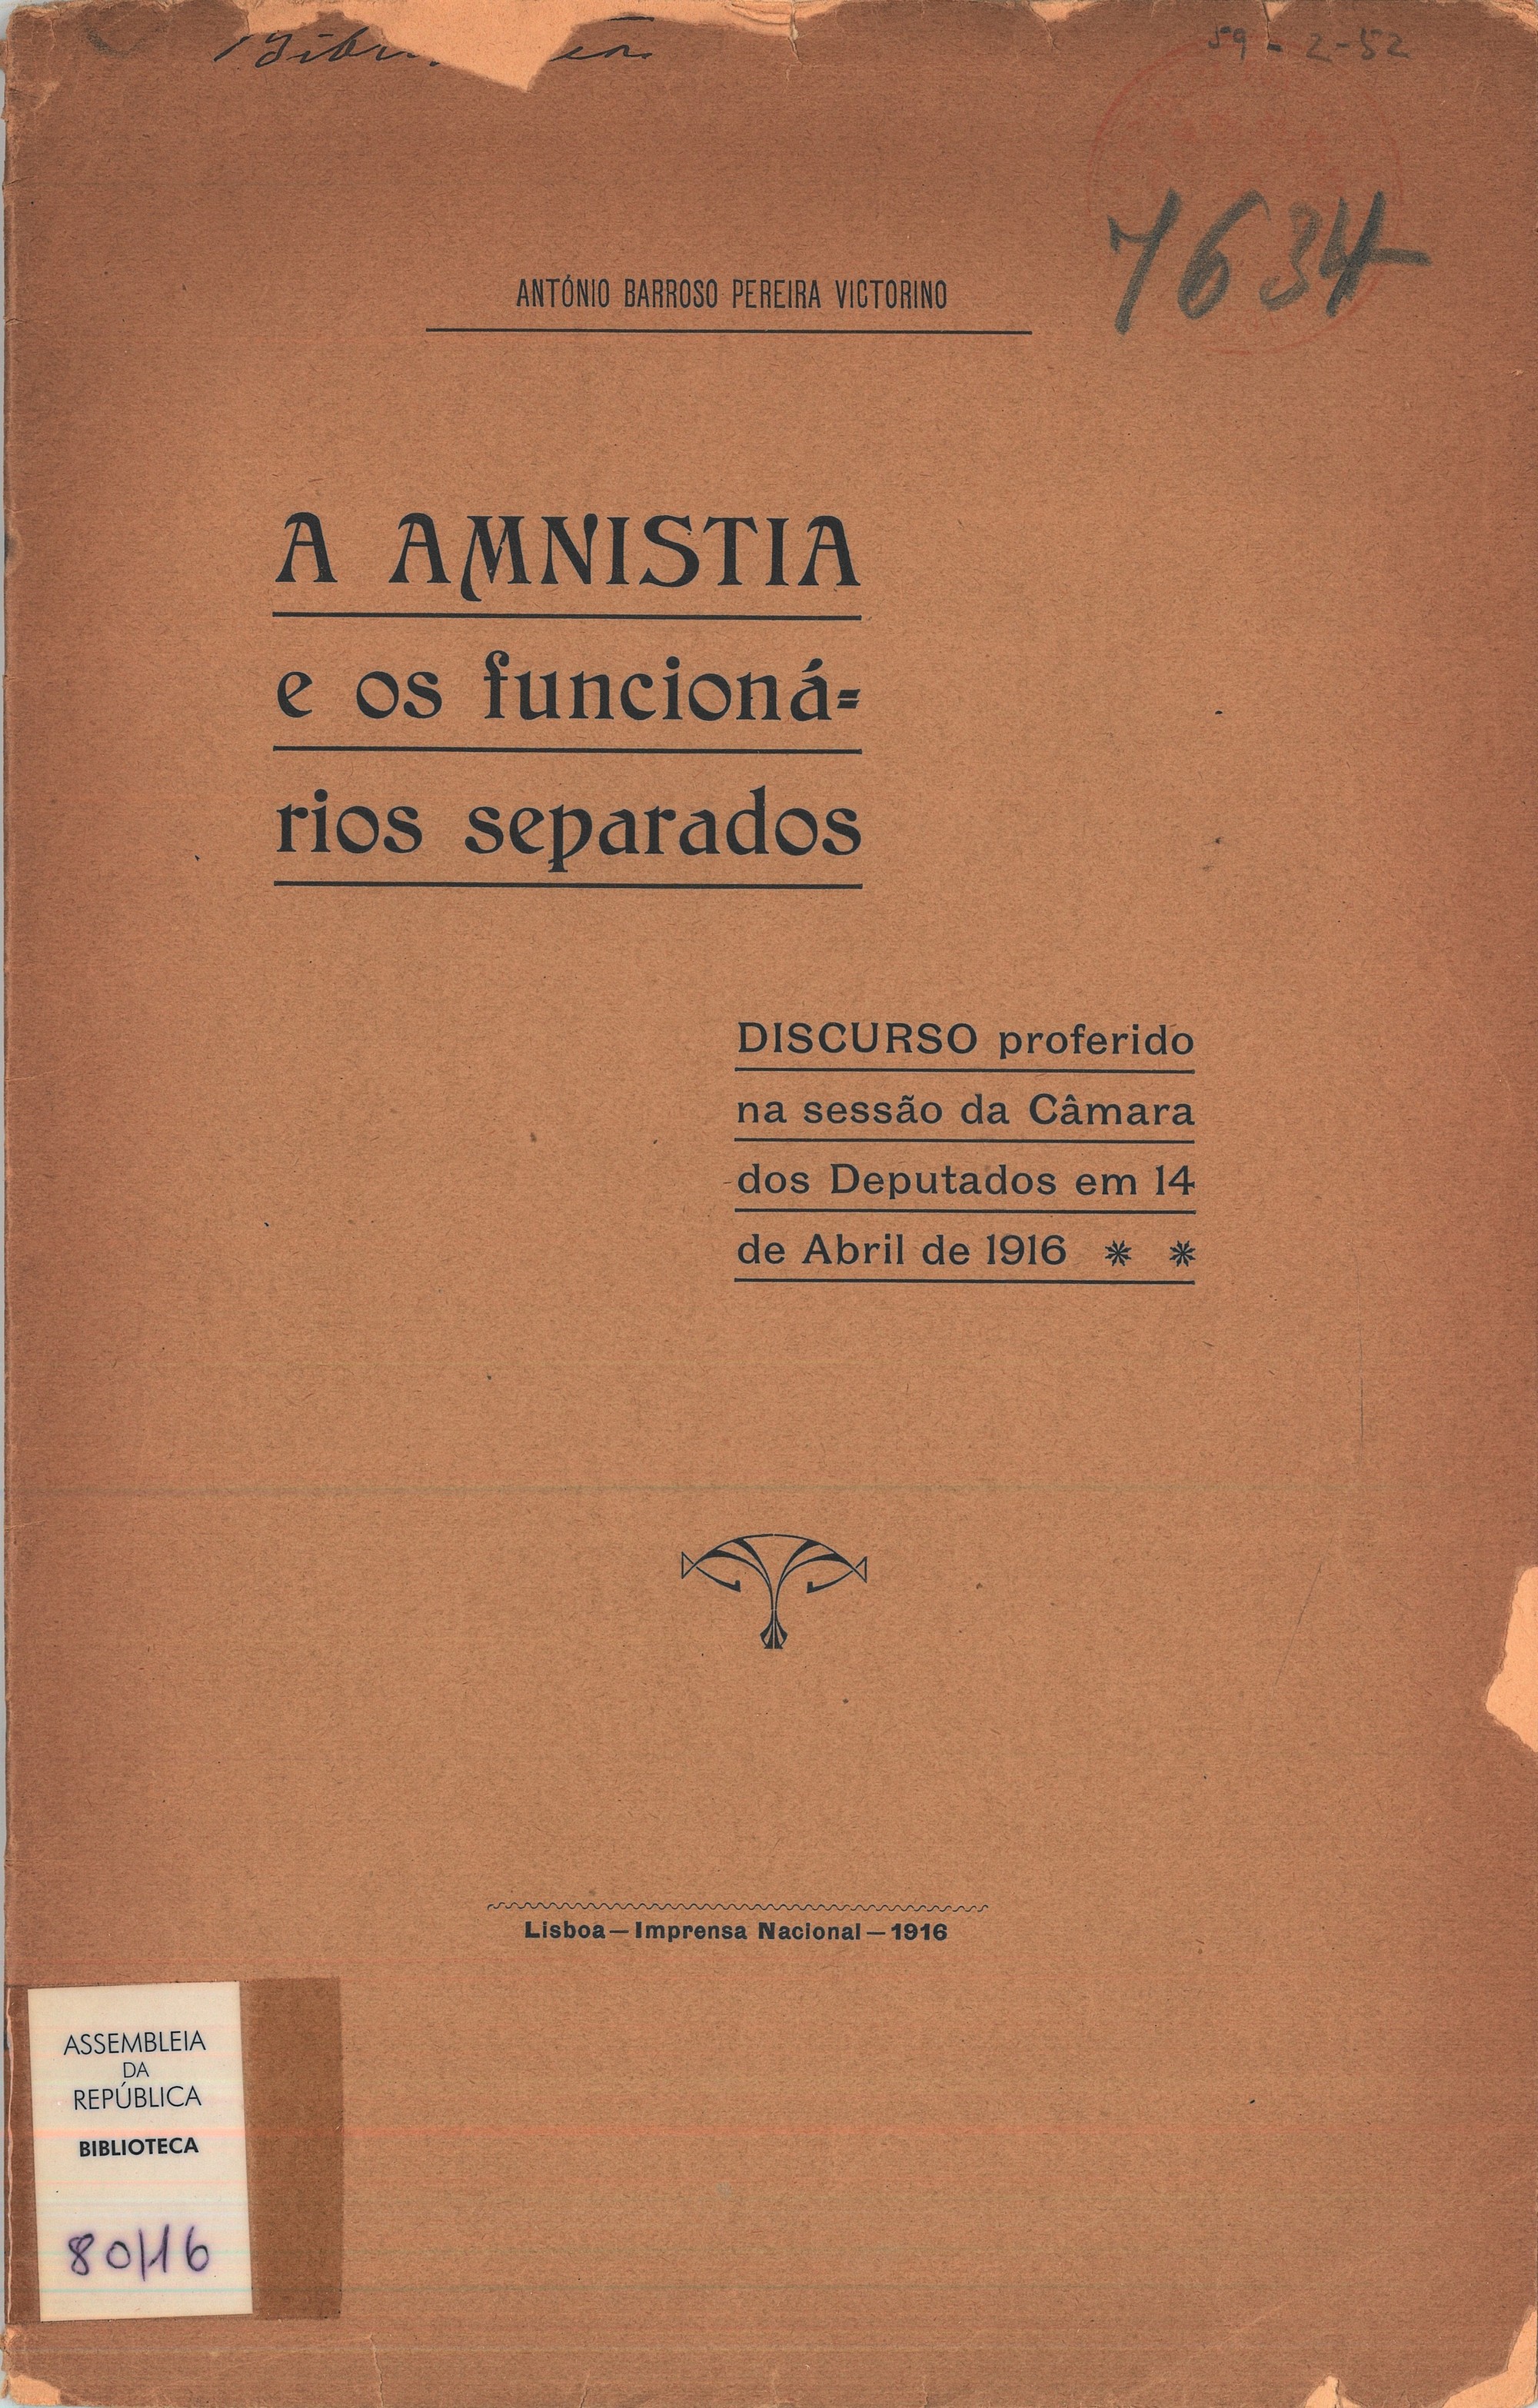 Capa de Livro sobre a amnistia